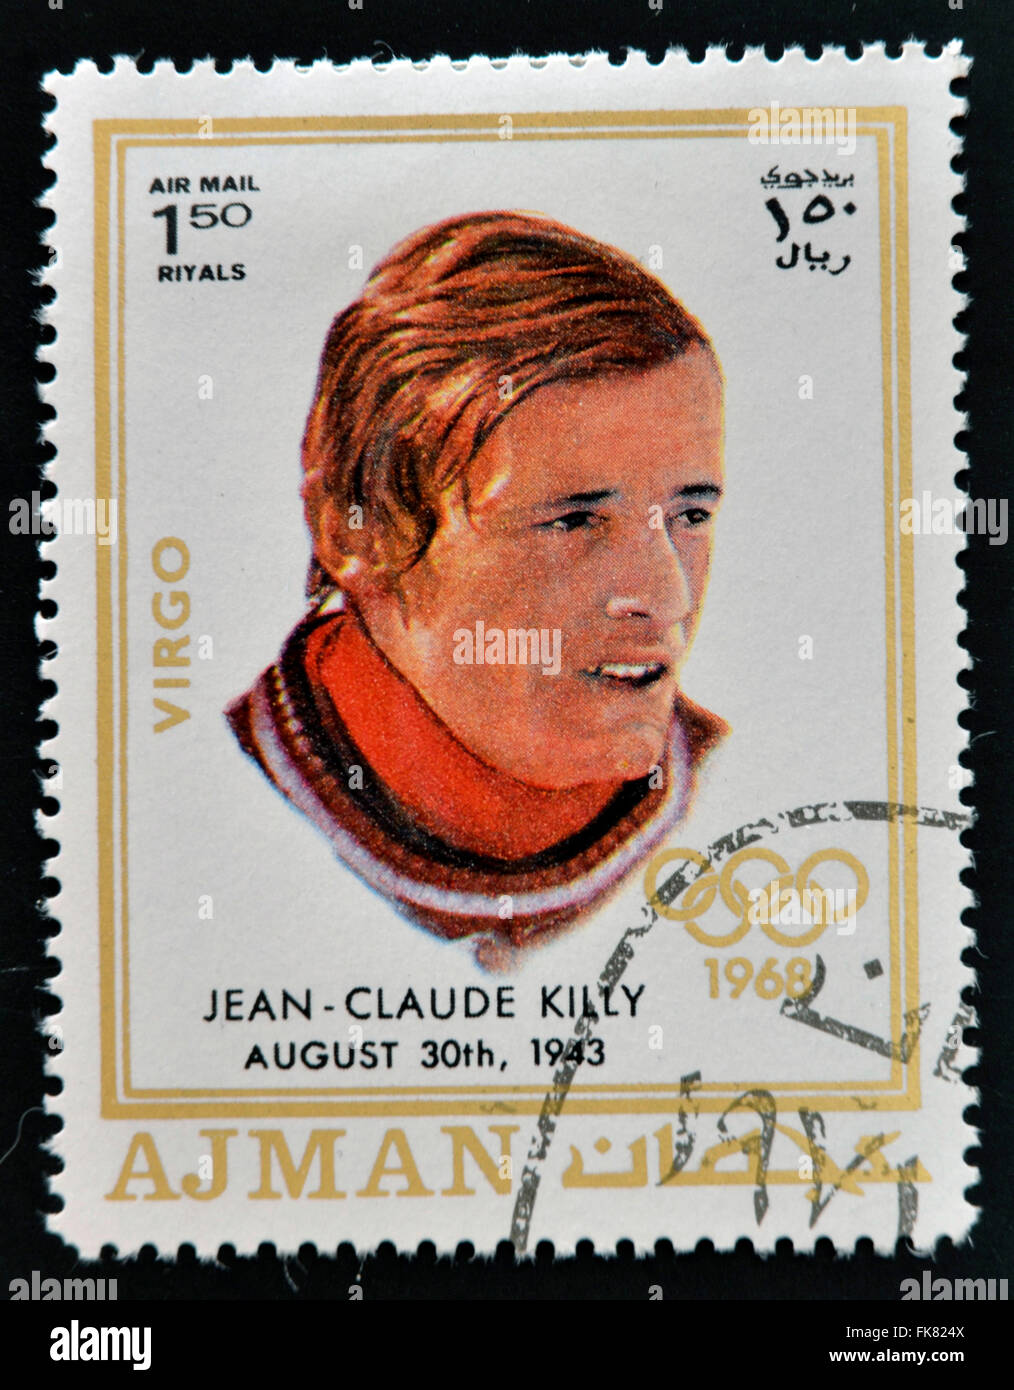 AJMAN - CIRCA 1970: A stamp printed in Ajman shows Jean-Claude Killy, circa 1970 Stock Photo